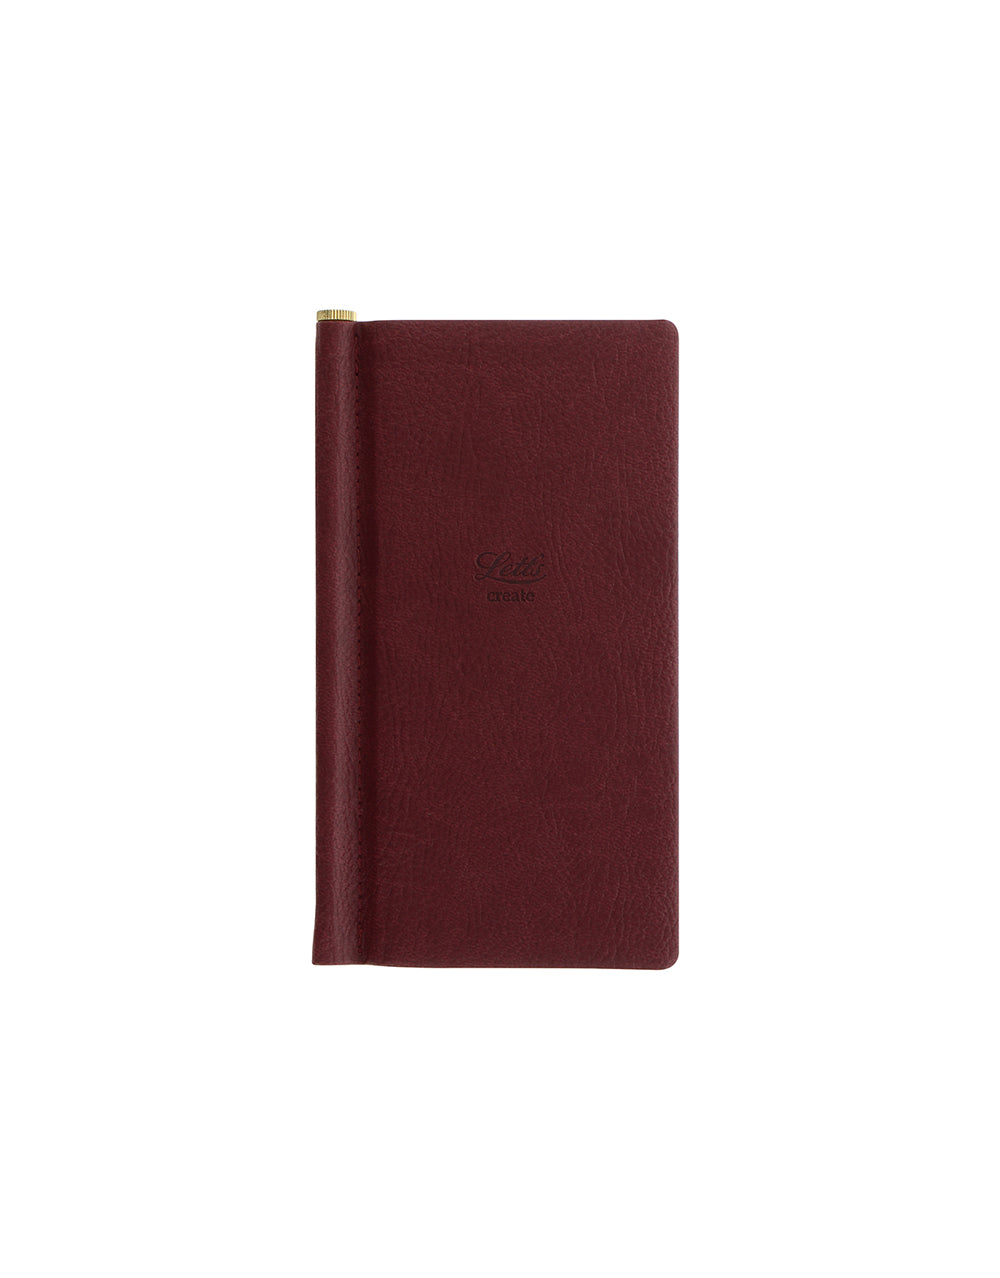 Origins Slim Pocket Plain Notebook Chocolate Brown